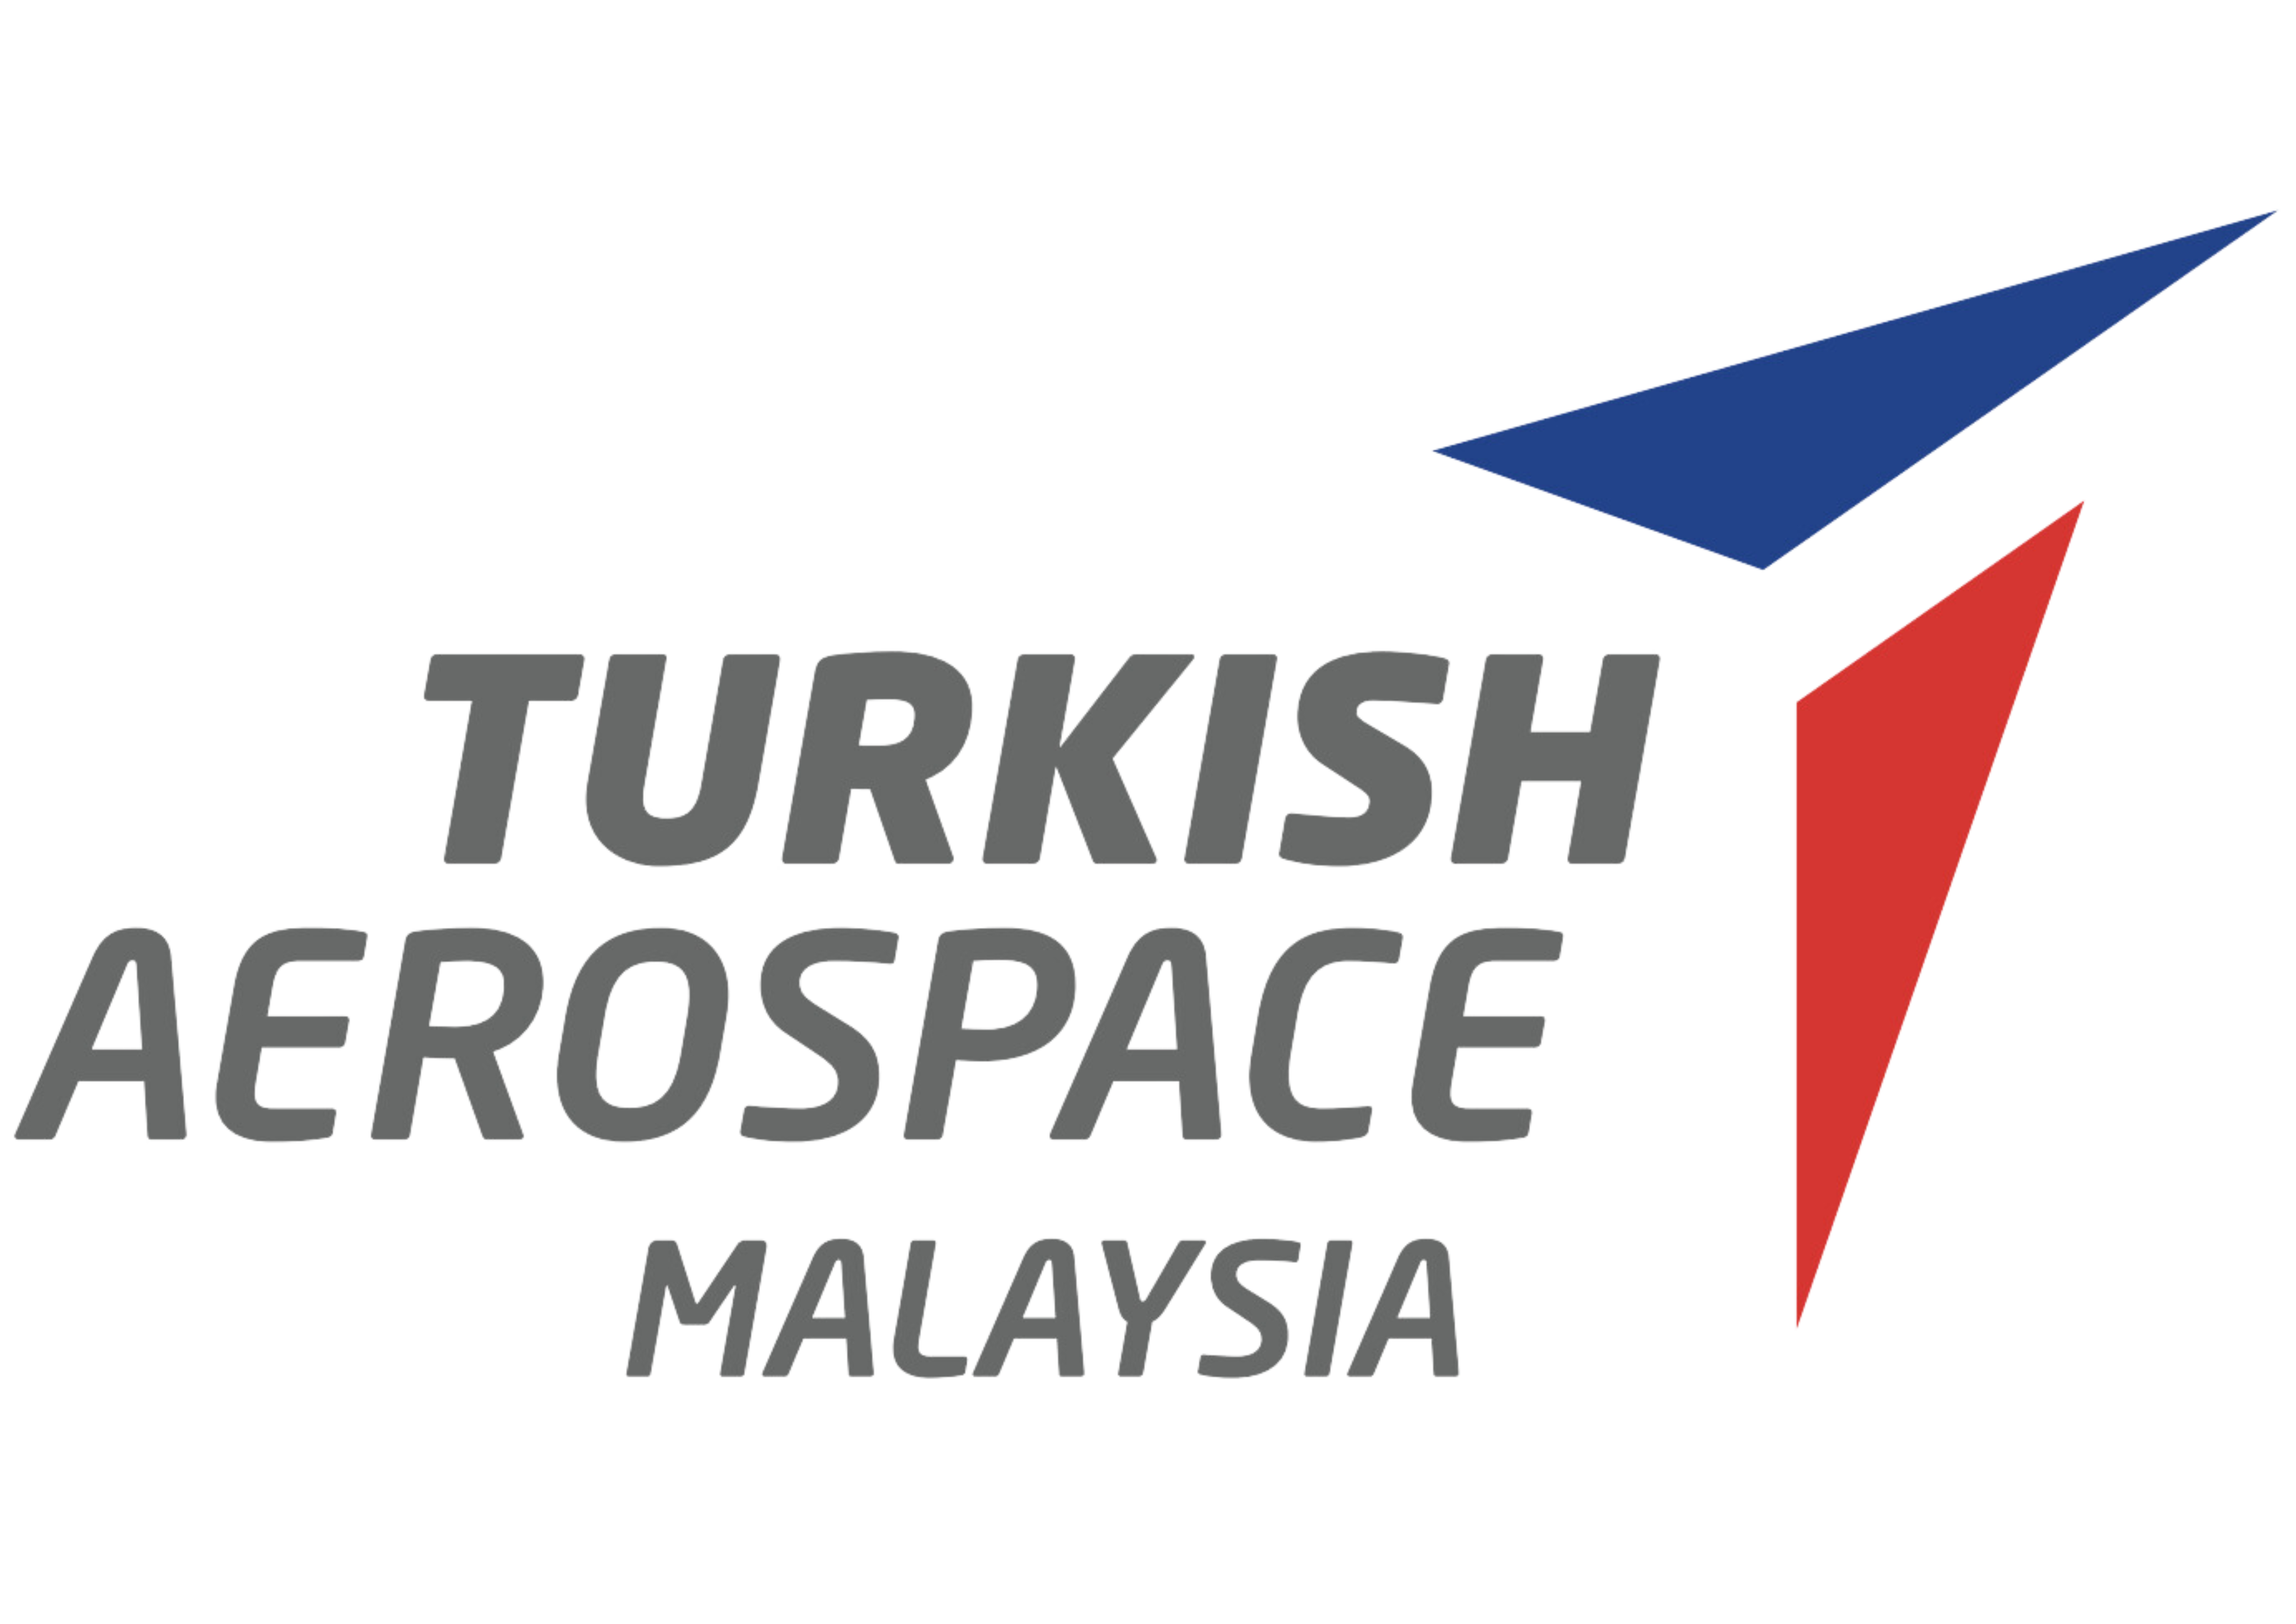 Turkish Aerospace Malaysia logo